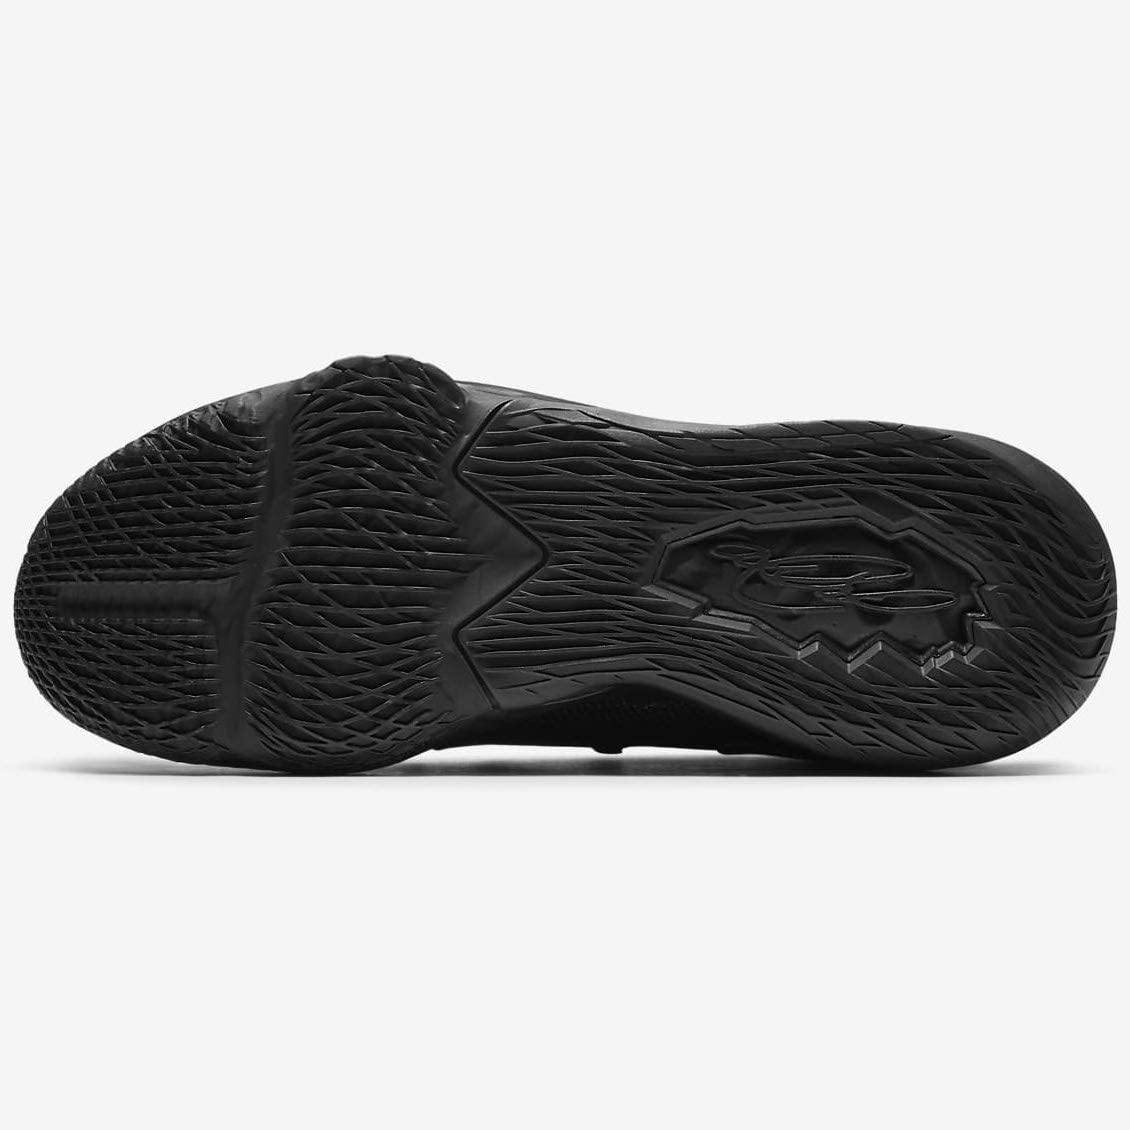 Nike LeBron 17 Low Basketball Shoes, Men's, Black - image 4 of 4